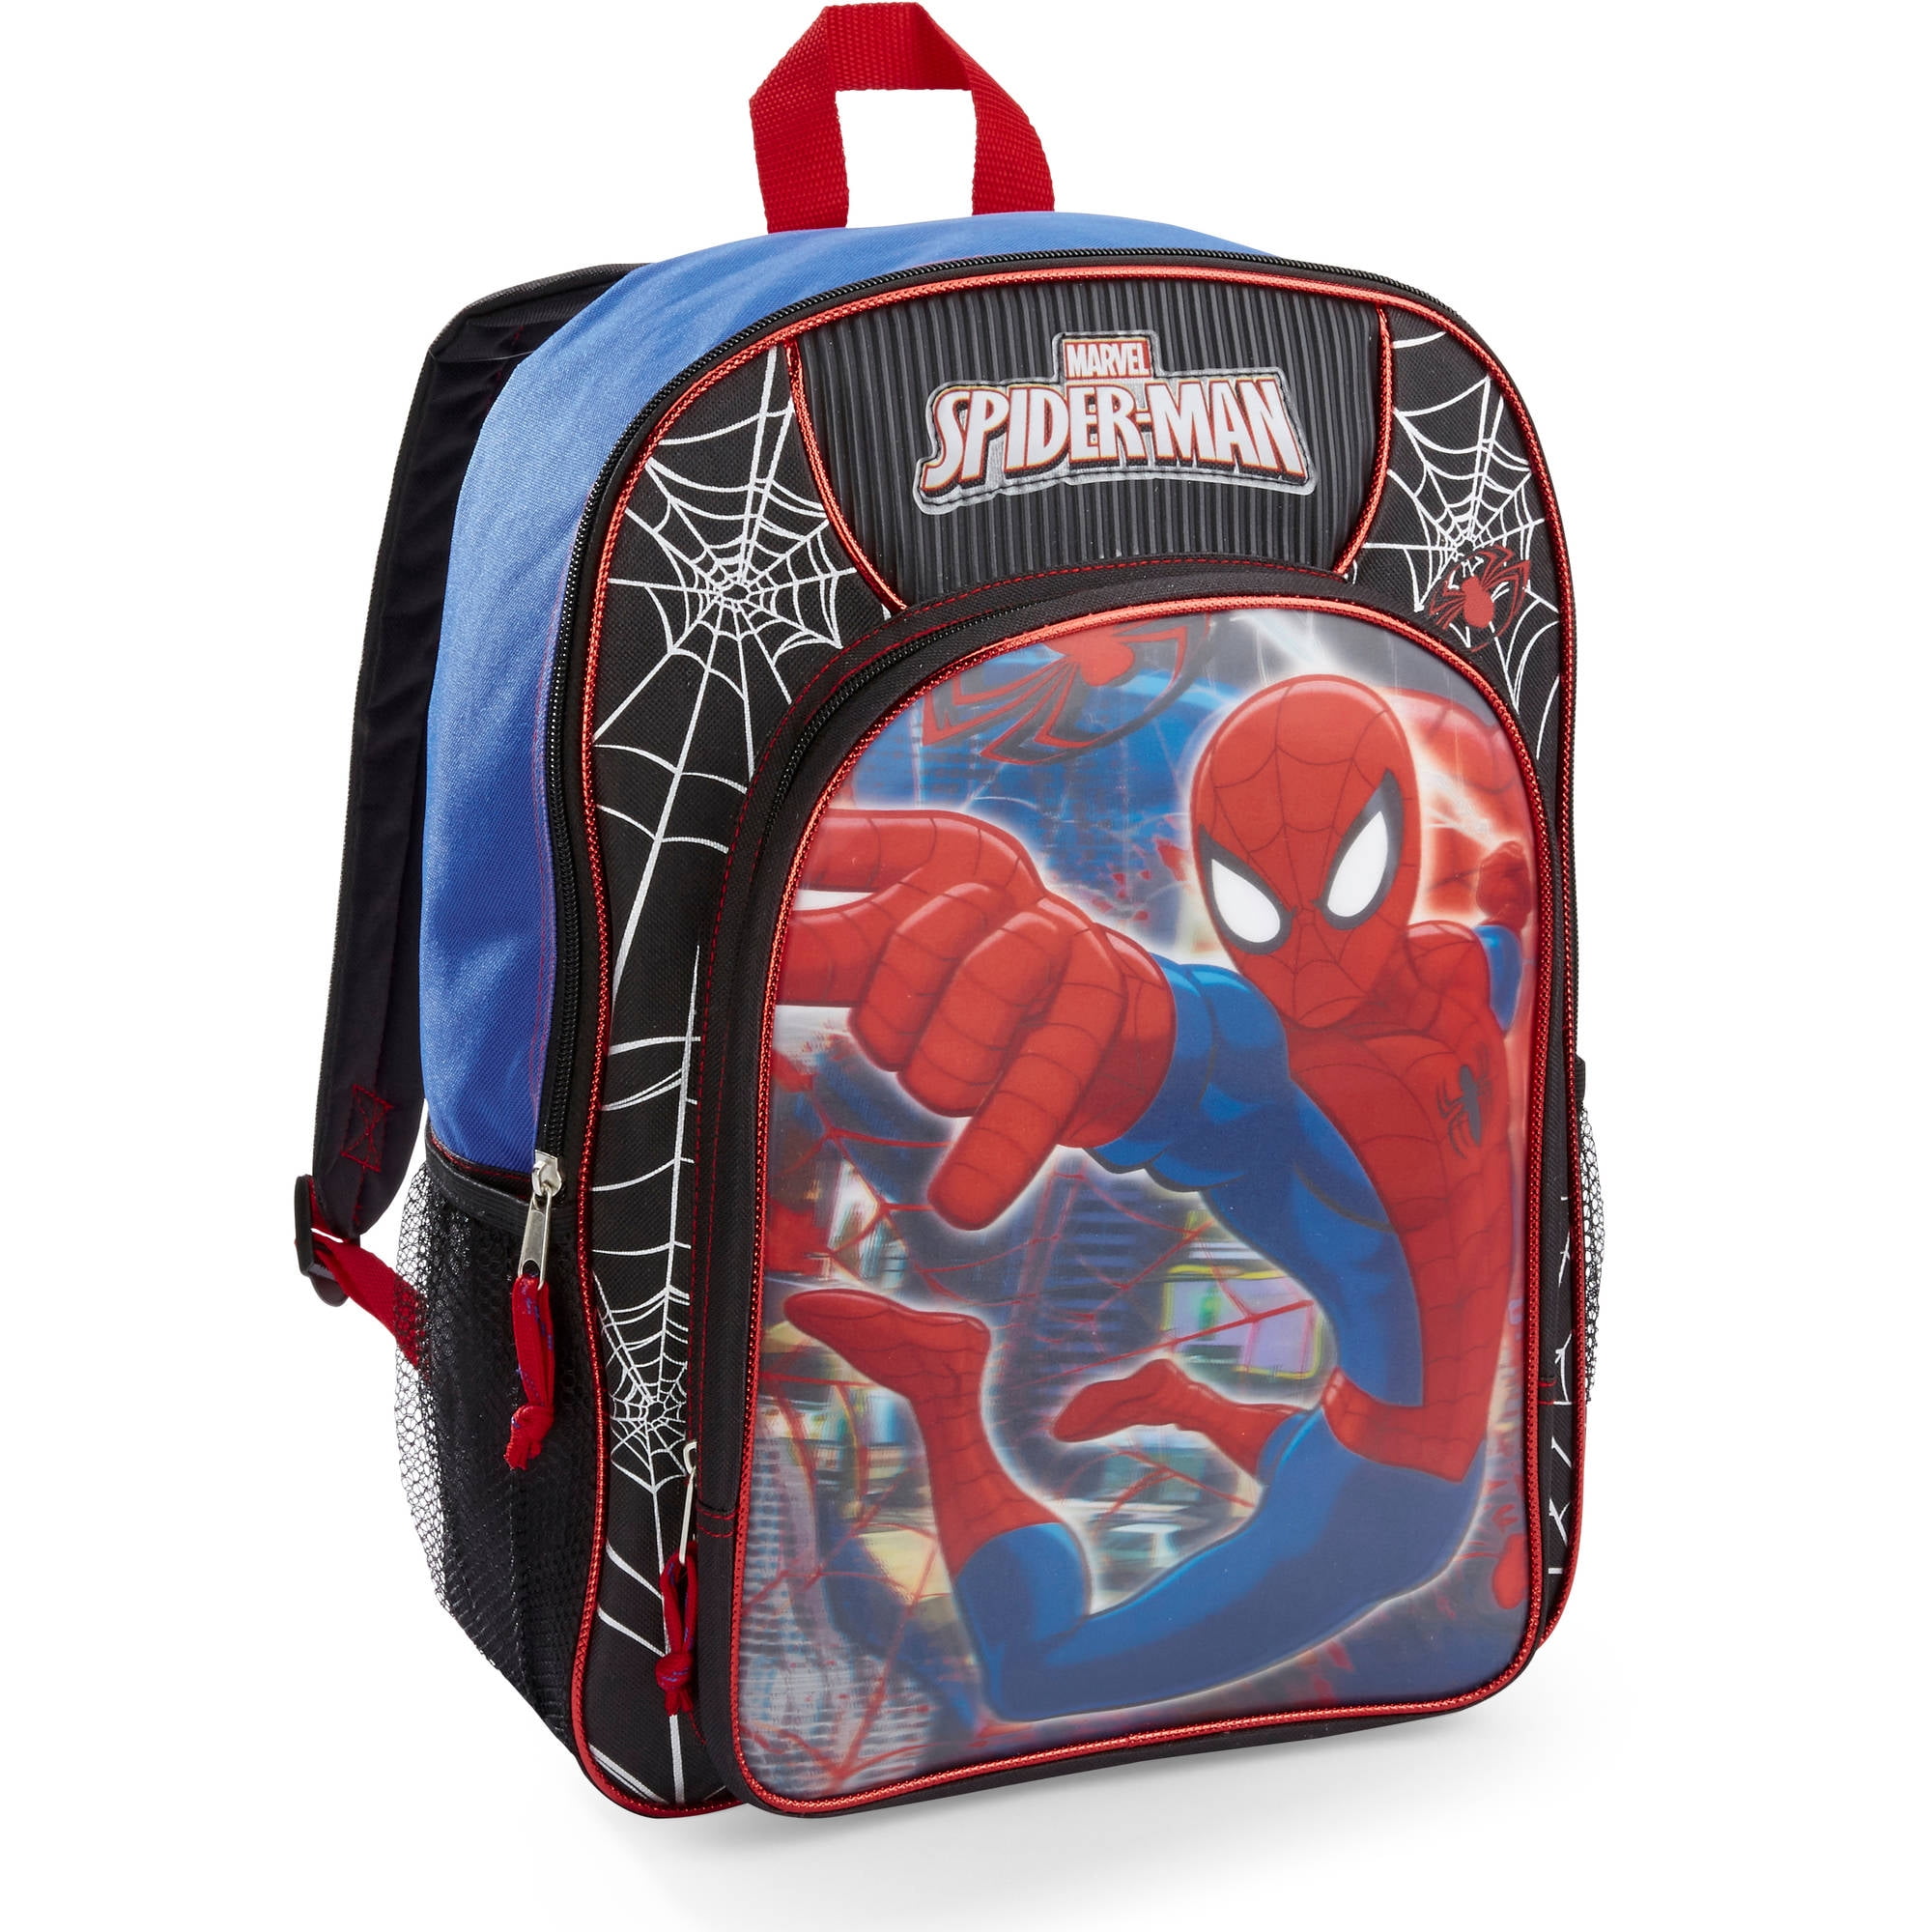 Spiderman Kids backpack - Walmart.com